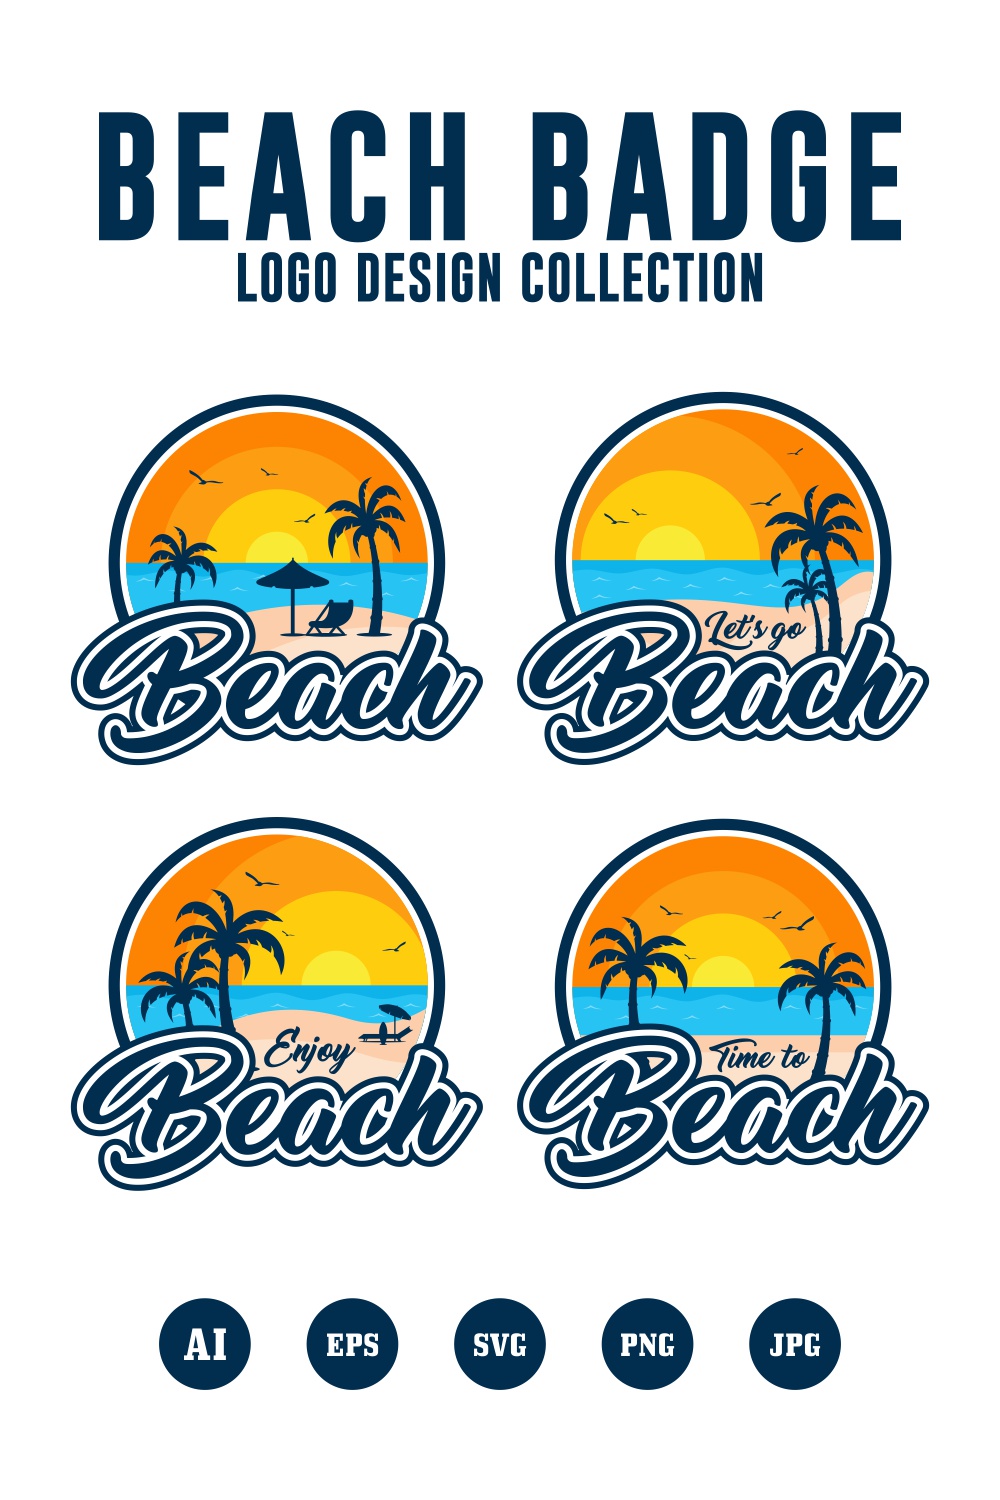 Set Beach badge logo design collection - $4 pinterest preview image.